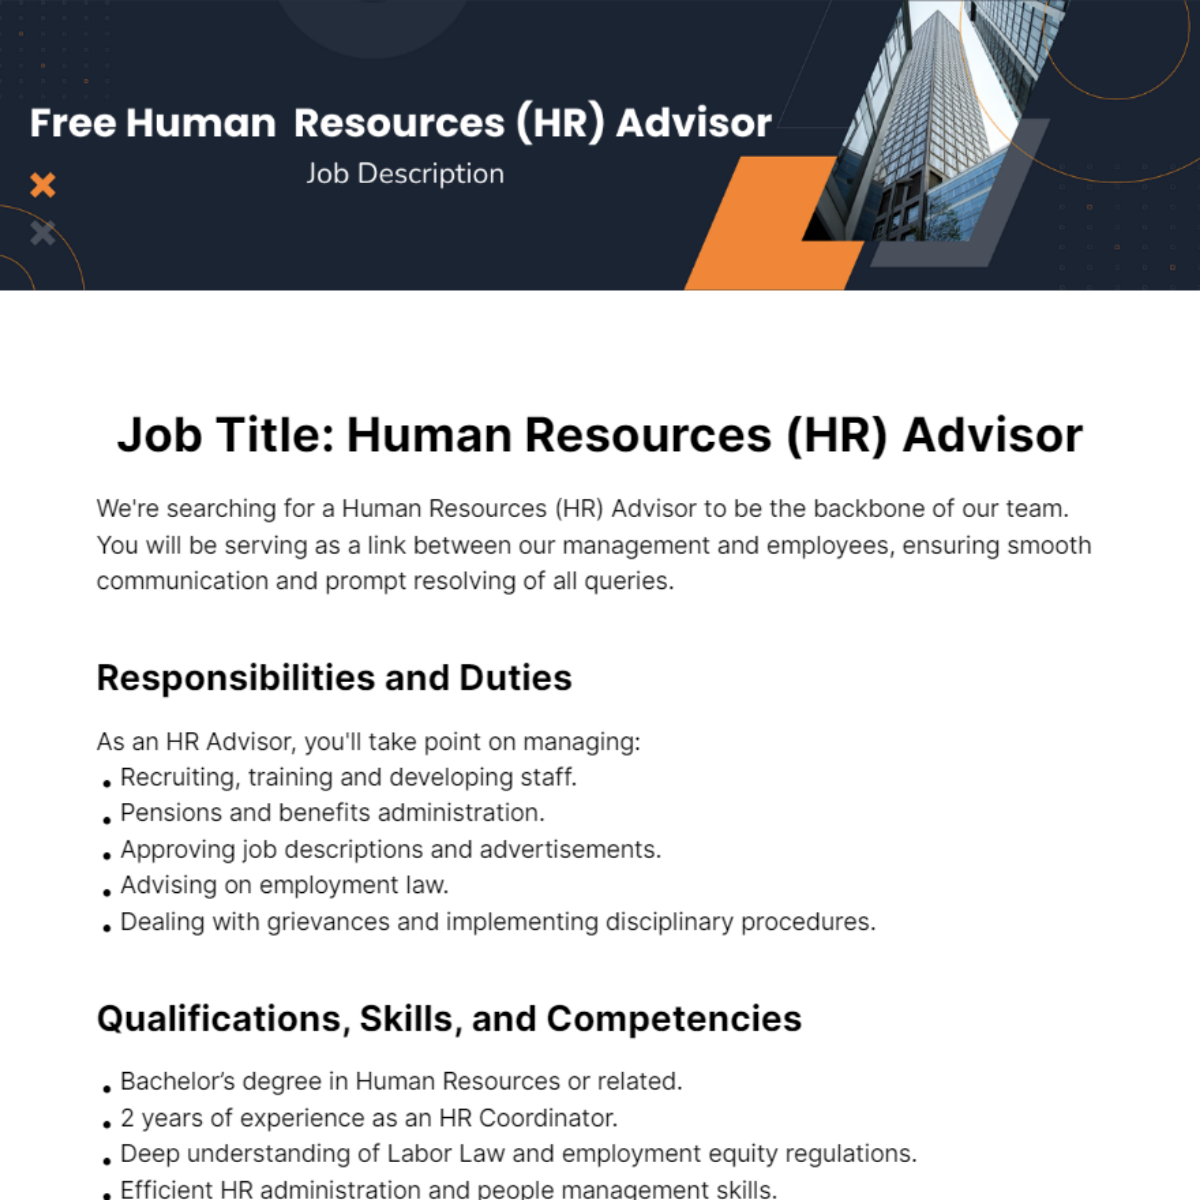 Human Resources (HR) Advisor Job Description Template